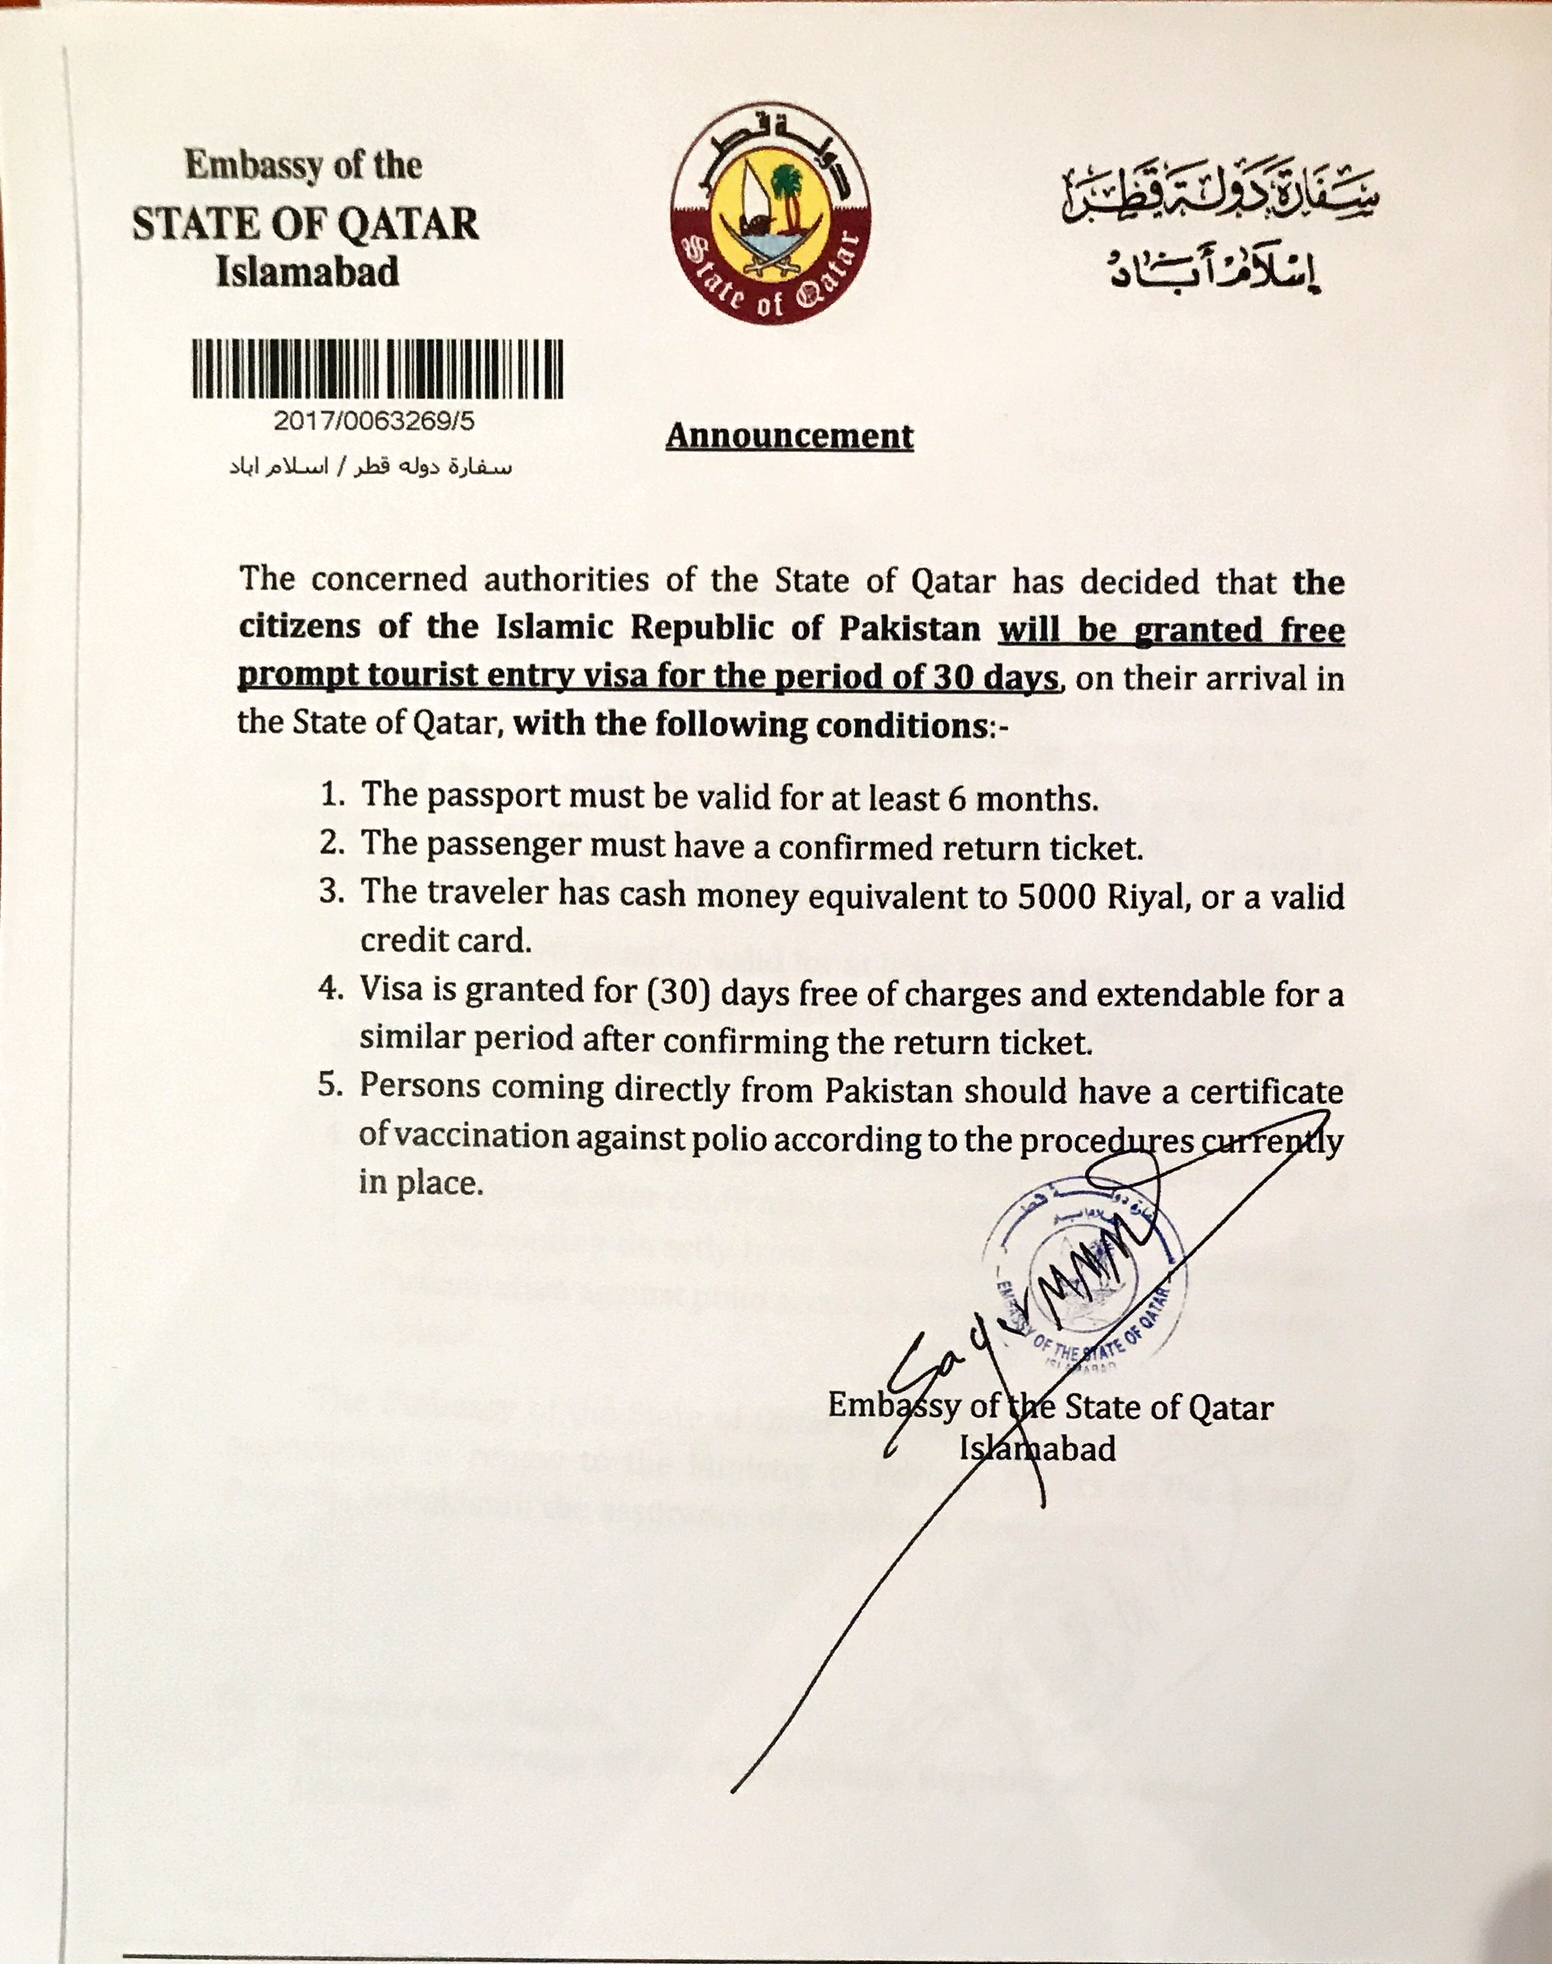 qatar visit visa price in pakistan